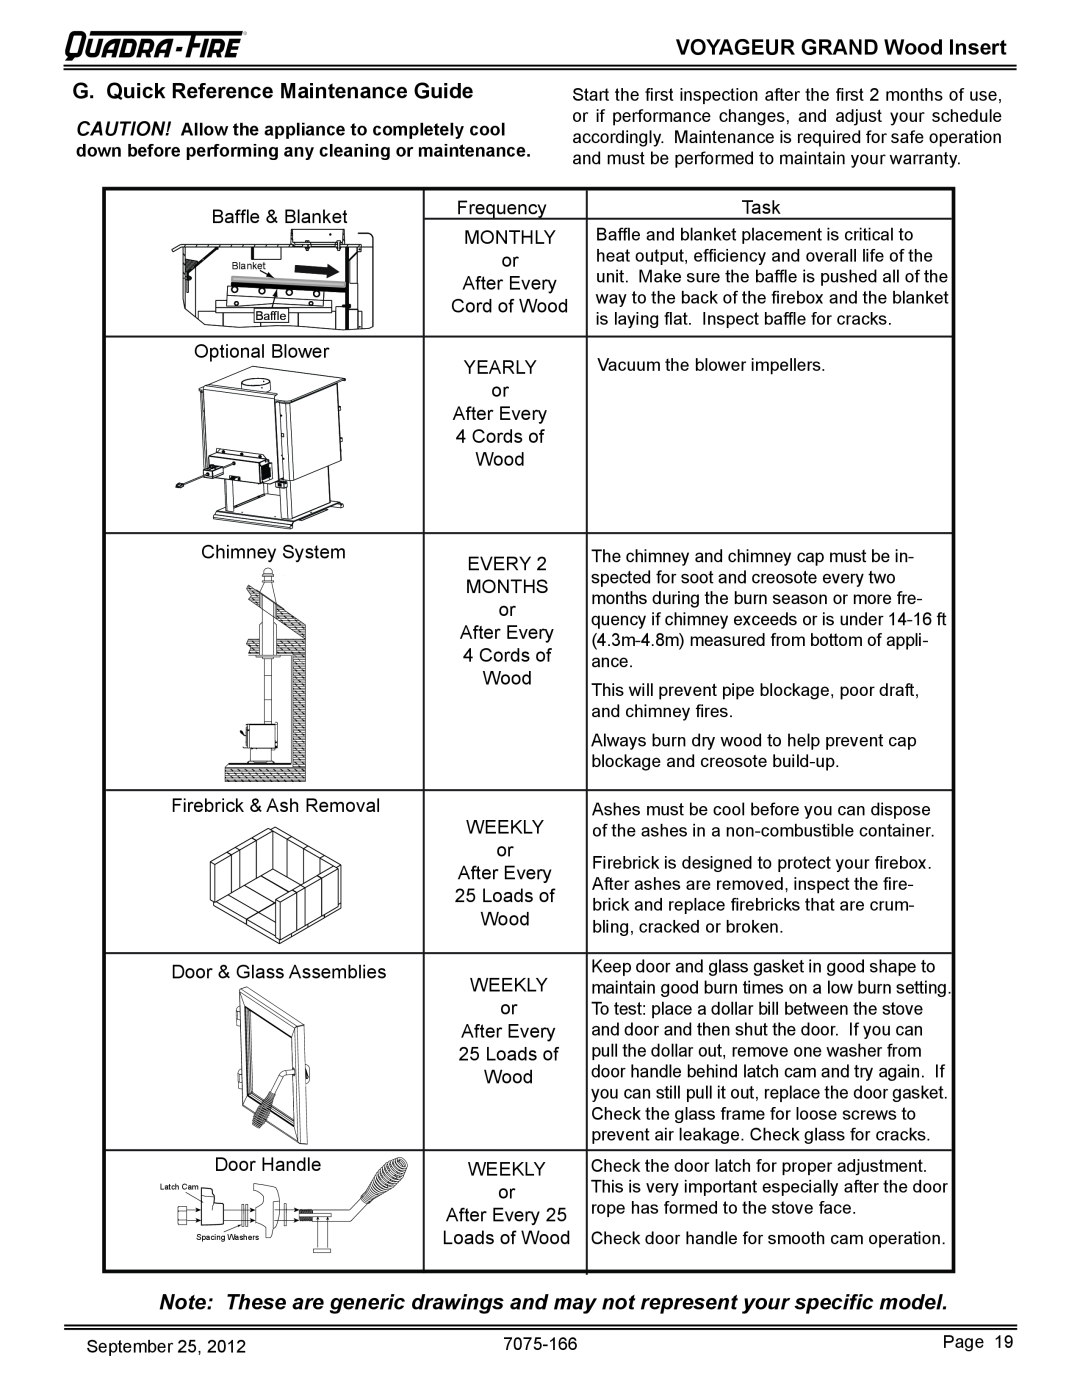 Radware VOYA-GRAND-PMH, VOYA-GRAND-MBK owner manual G. Quick Reference Maintenance Guide, VOYAGEUR GRAND Wood Insert, Baffle 